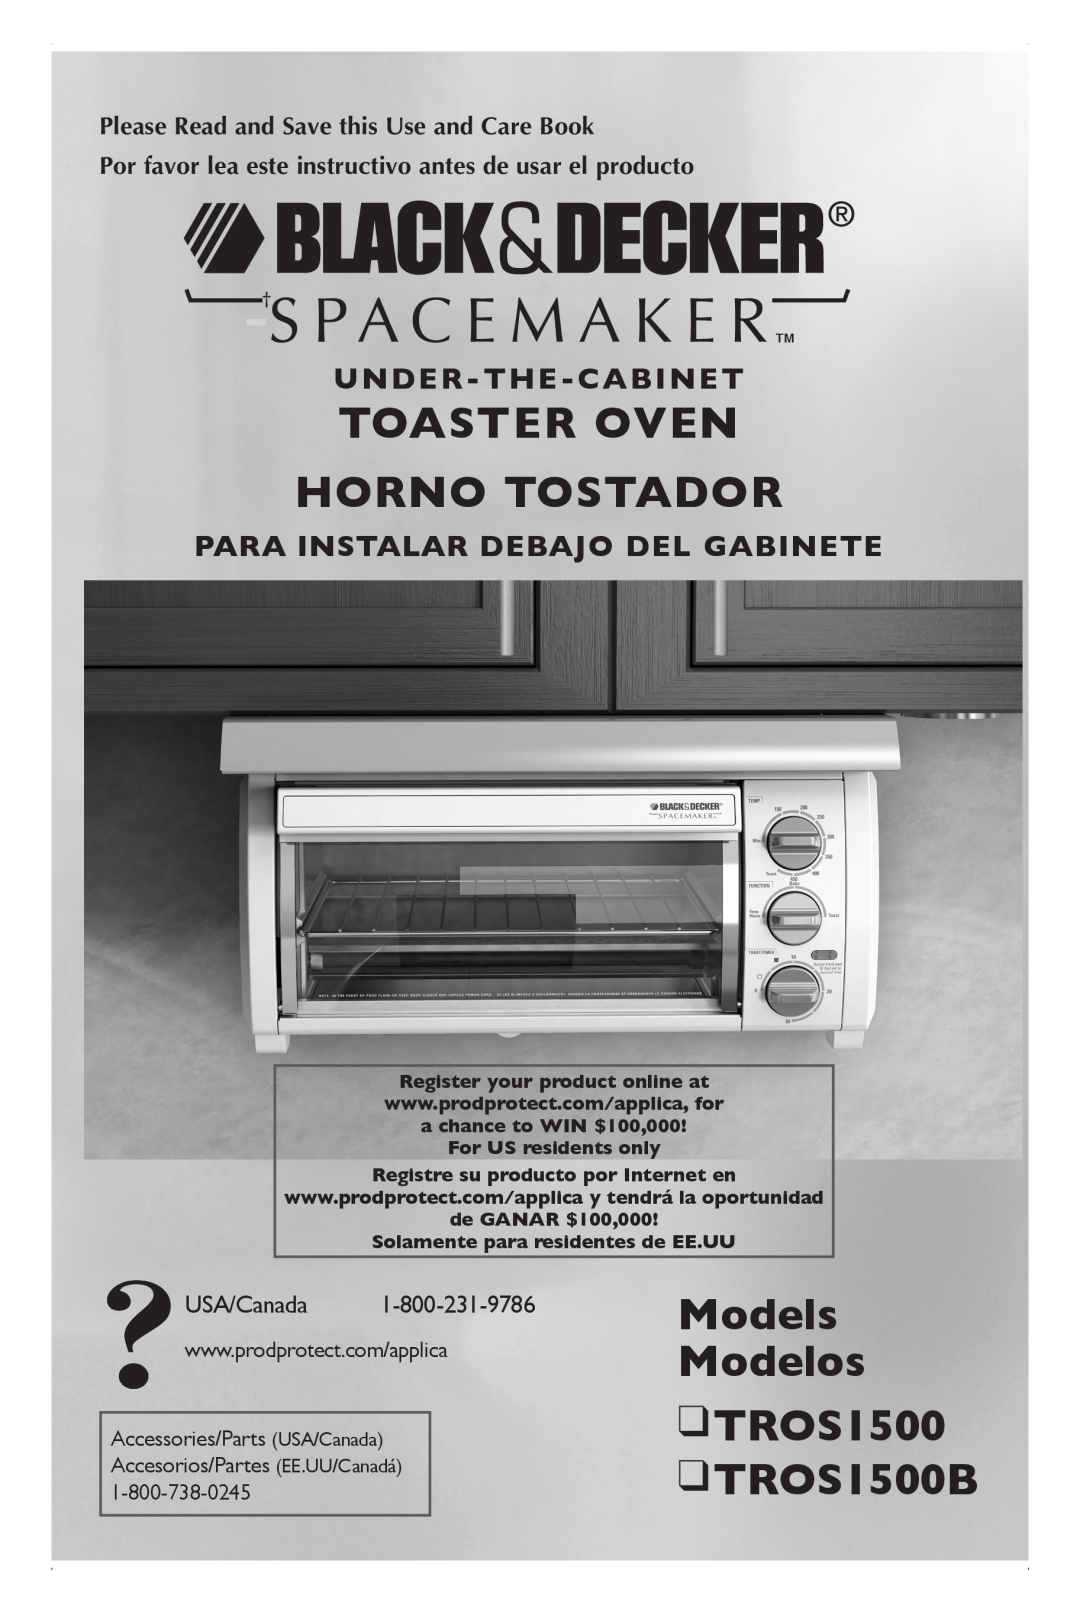 Black & Decker TROSOS1500 manual Toaster Oven Horno tostador, Models Modelos TROS1500 TROS1500B, Under-The-Cabinet 